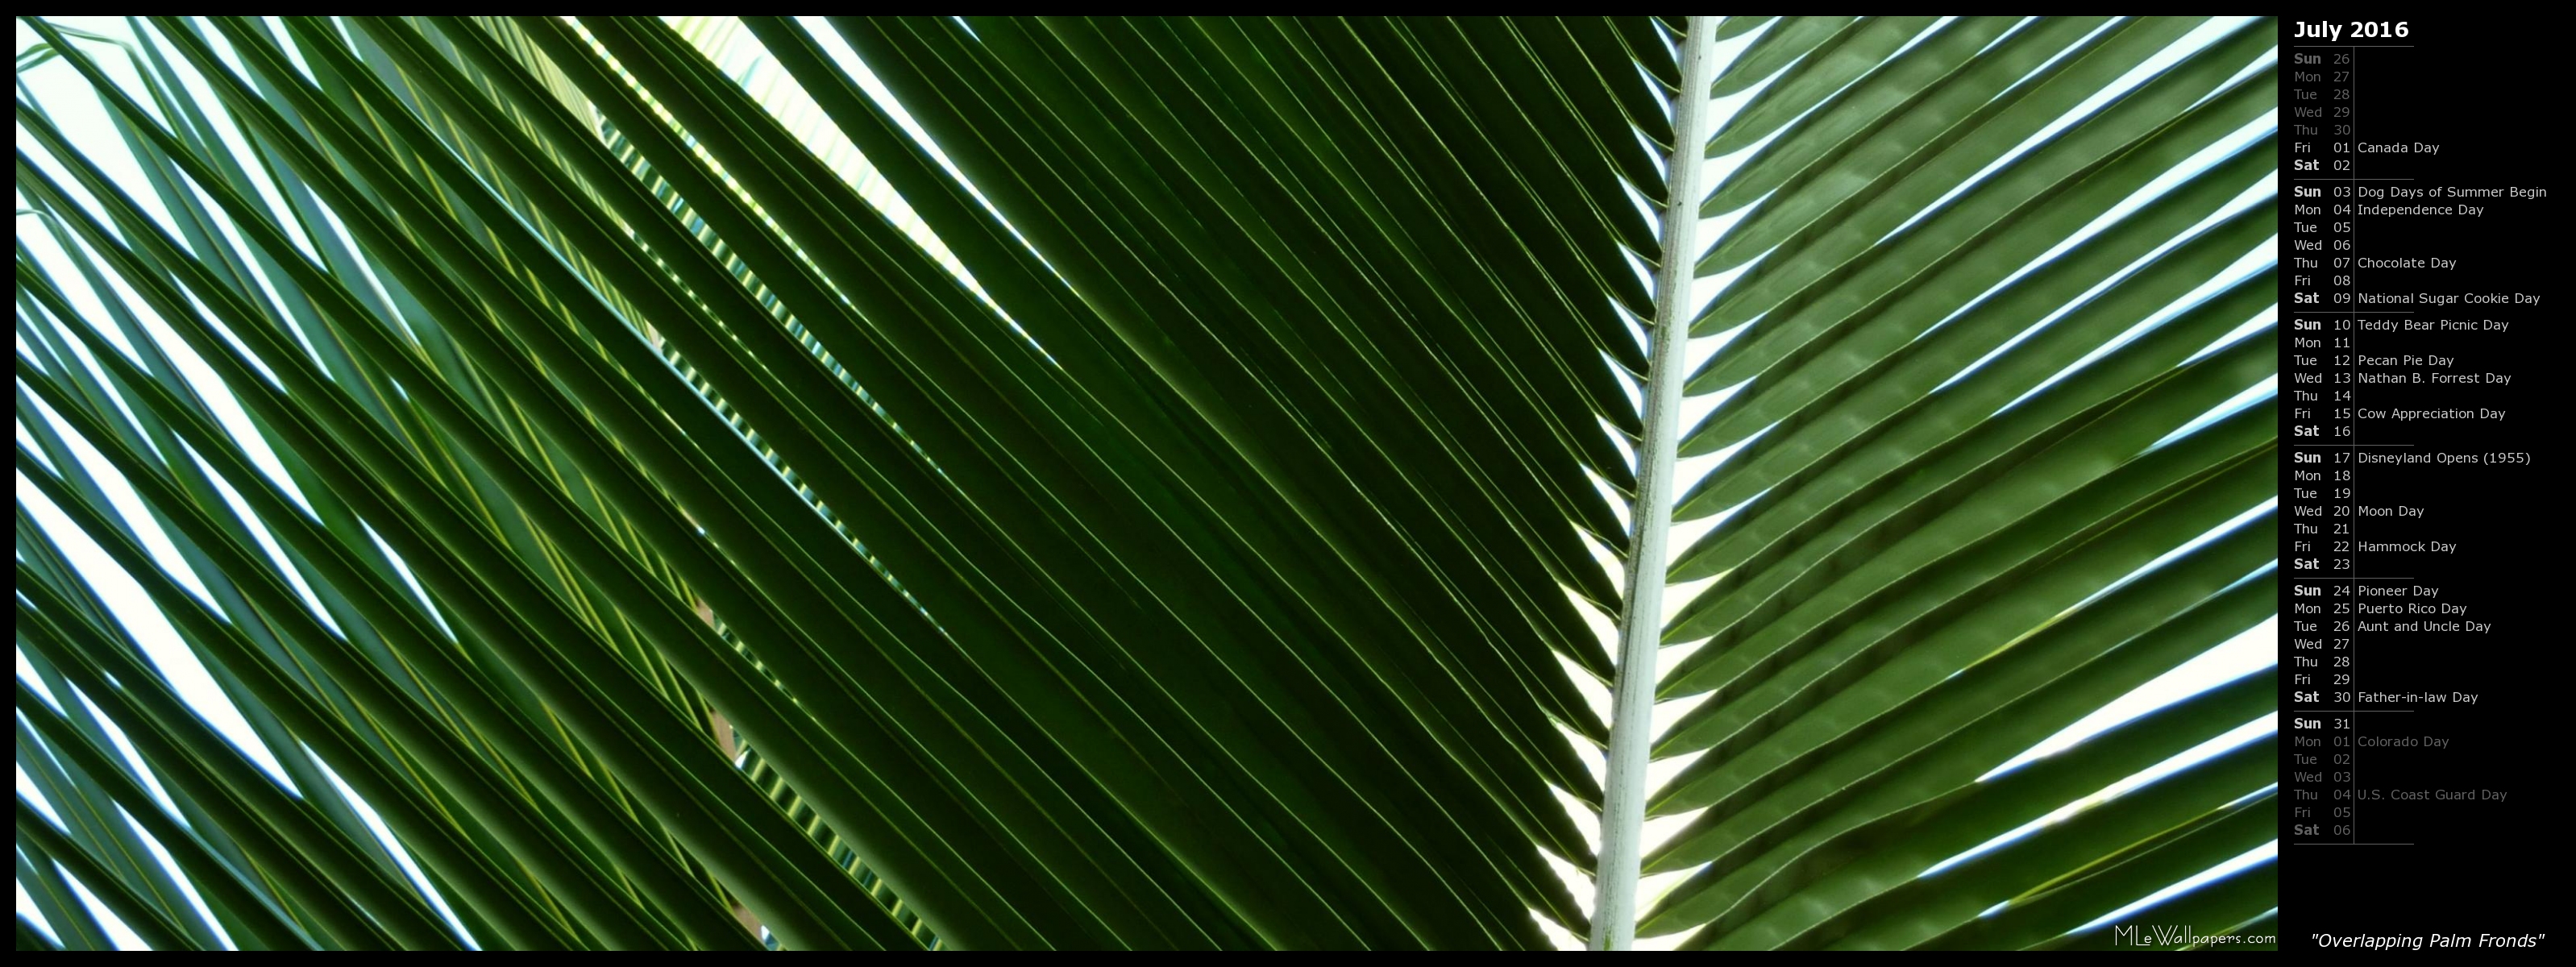 Mlewallpaper Overlapping Palm Fronds Calendar